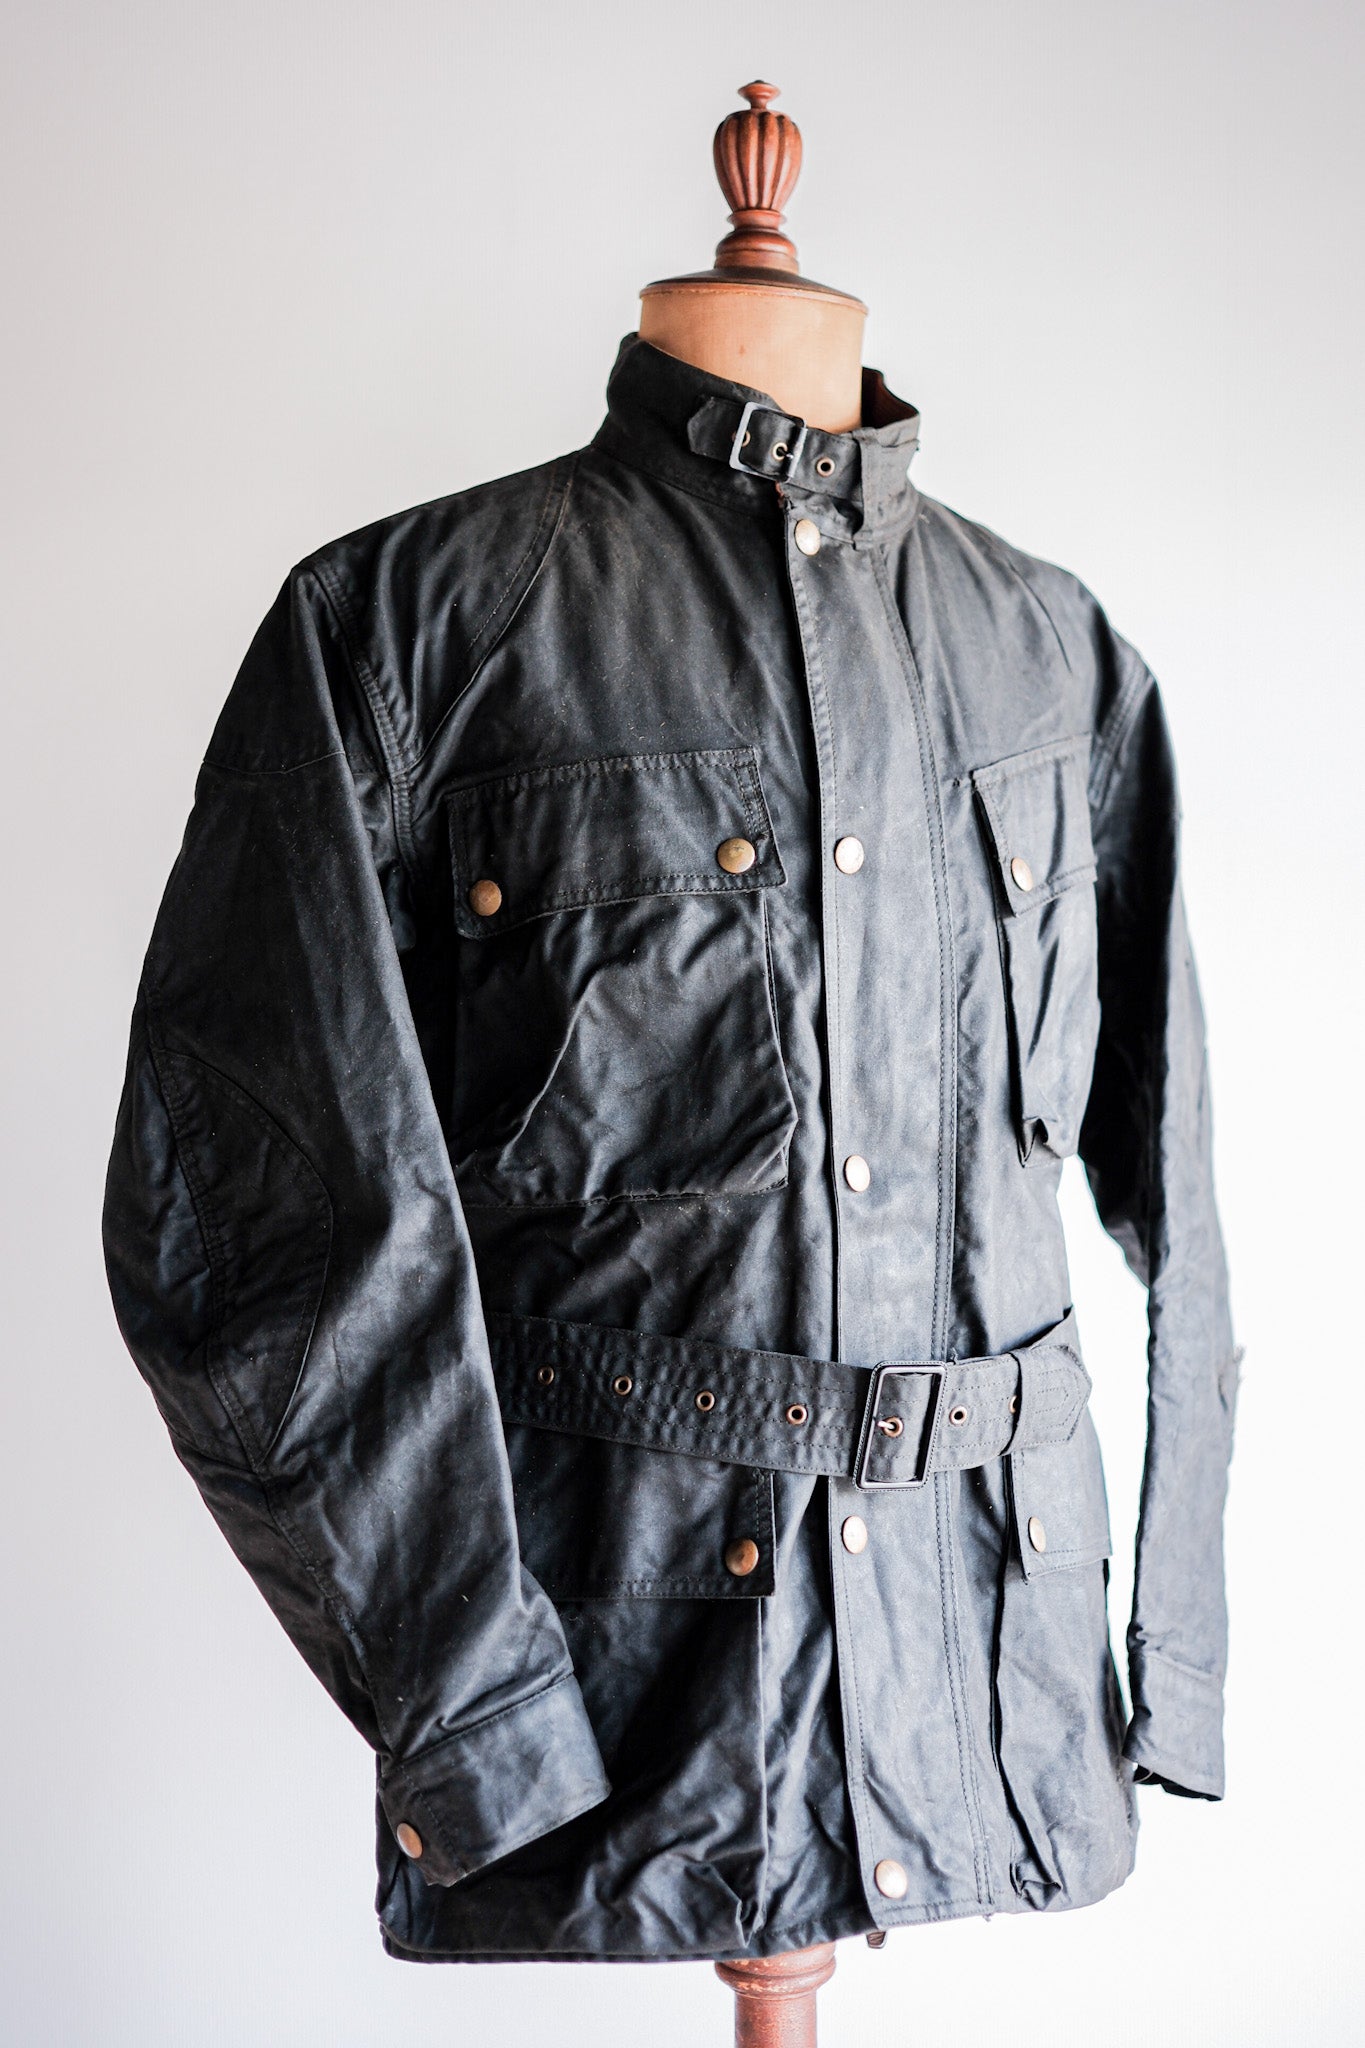 【~60's】Vintage Belstaff Waxed Jacket "TRIALMASTER" "Red Label"